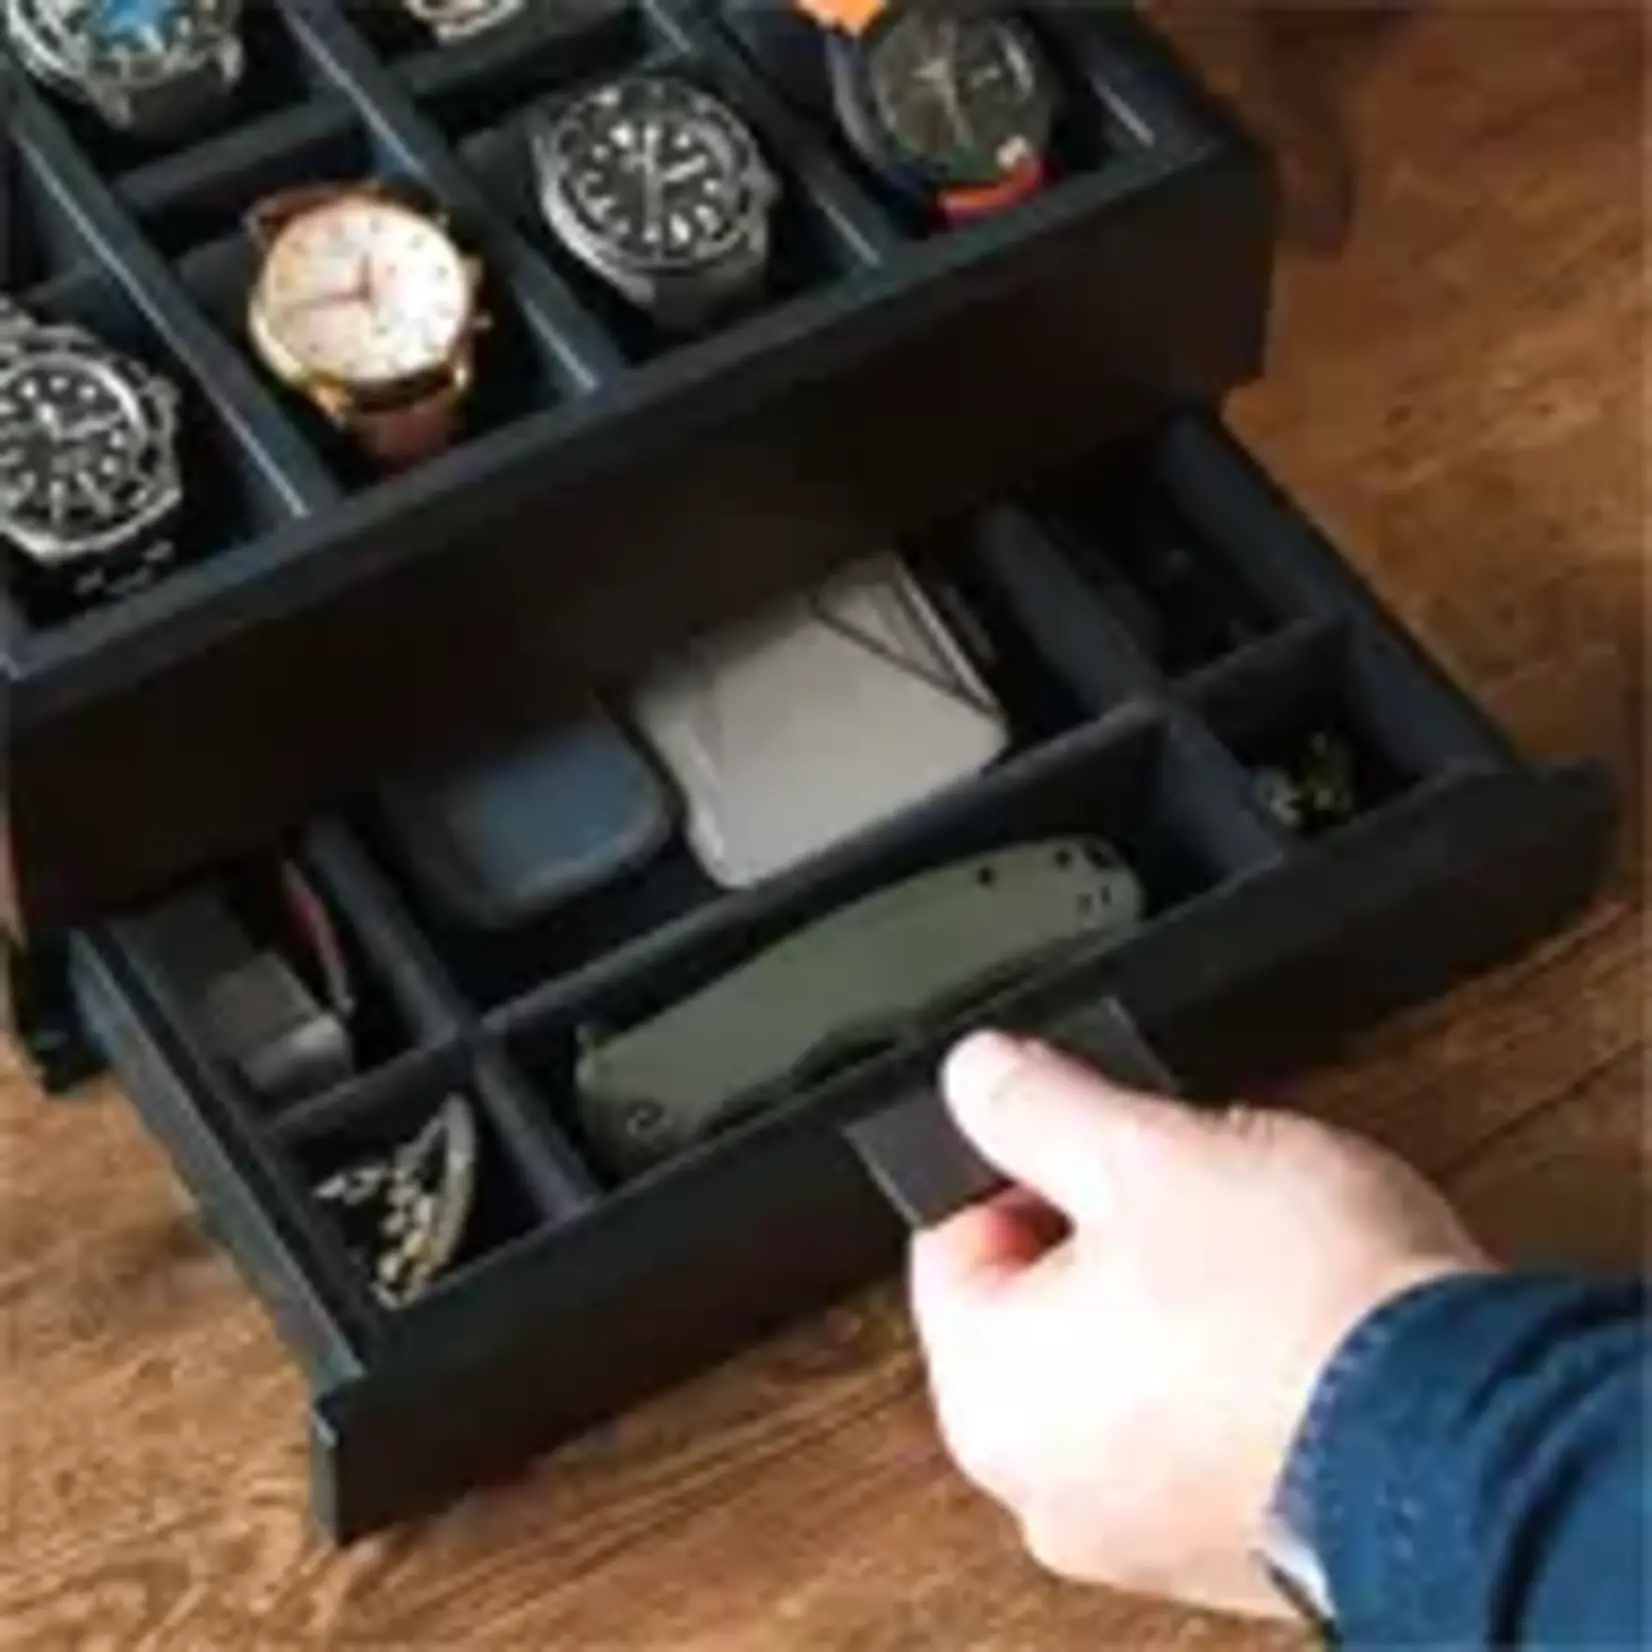 Case Elegance 8 Slot Mill Watch Box Black Finish